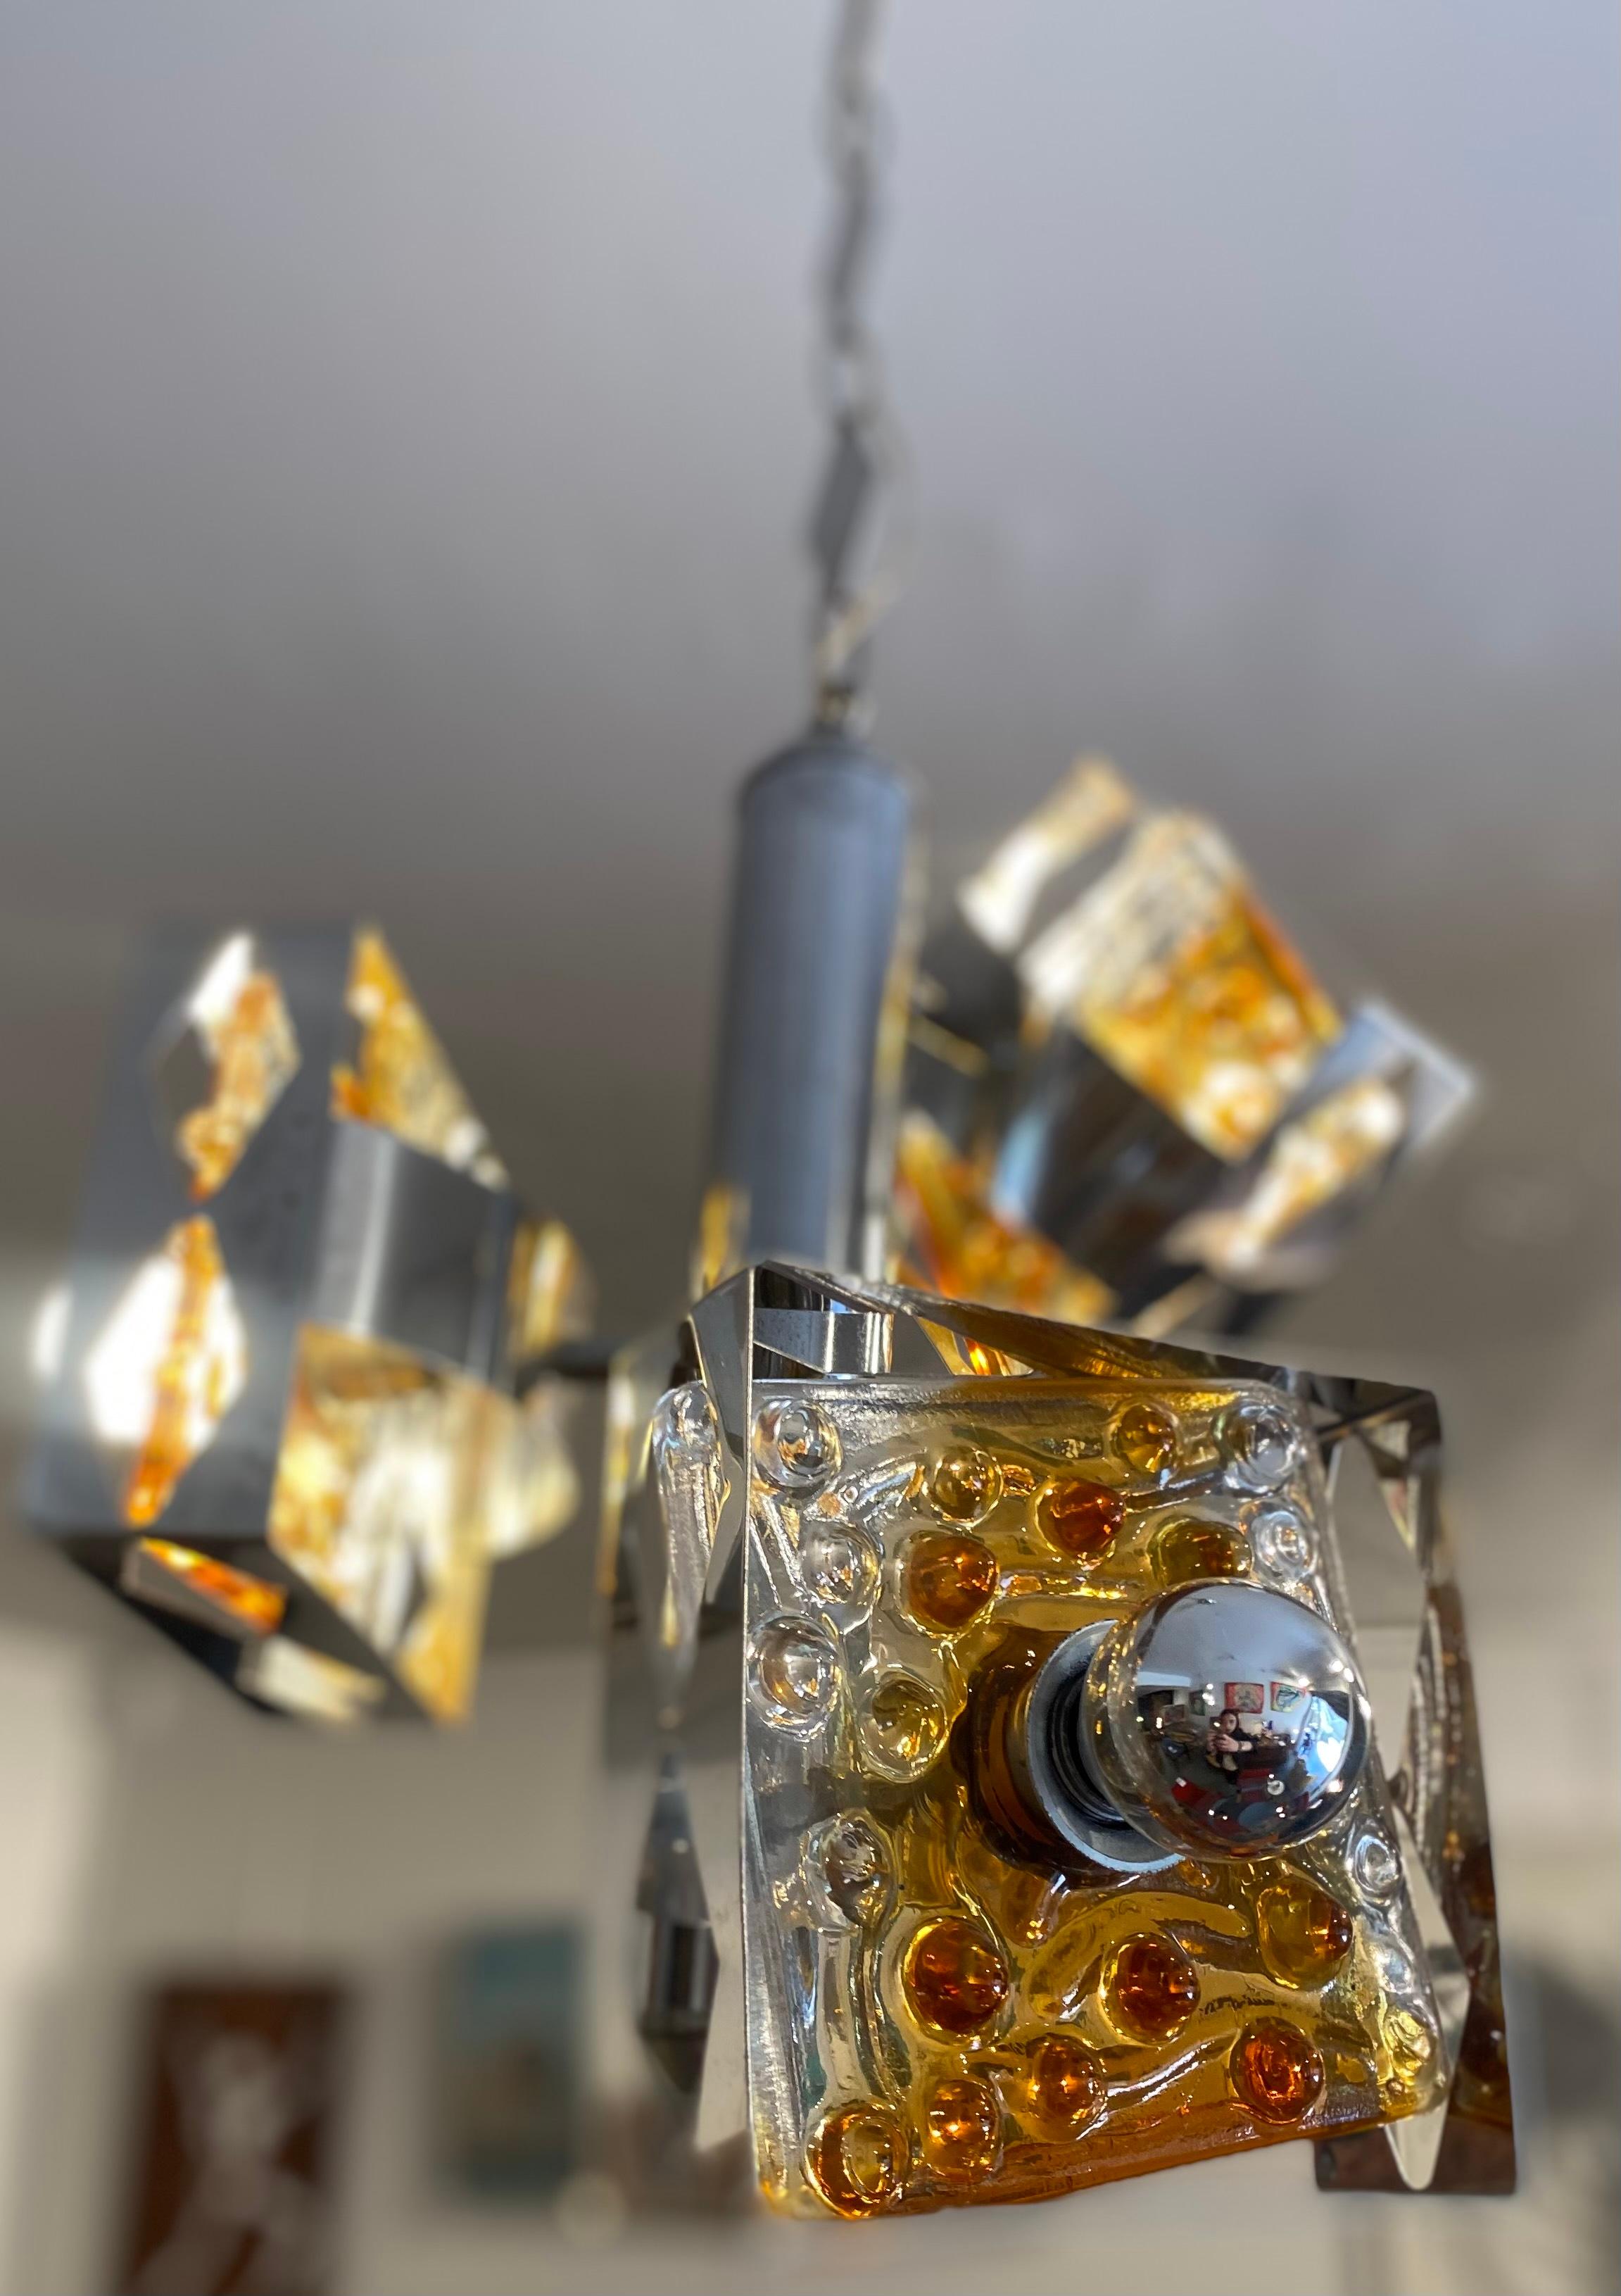 Murano glass pendant lamp - Toni Zuccheri - circa 1970
Mazzega Edition
Dimensions: h101 x w 40 x d 40
Steel and Murano Glass
In very good vintage condition.